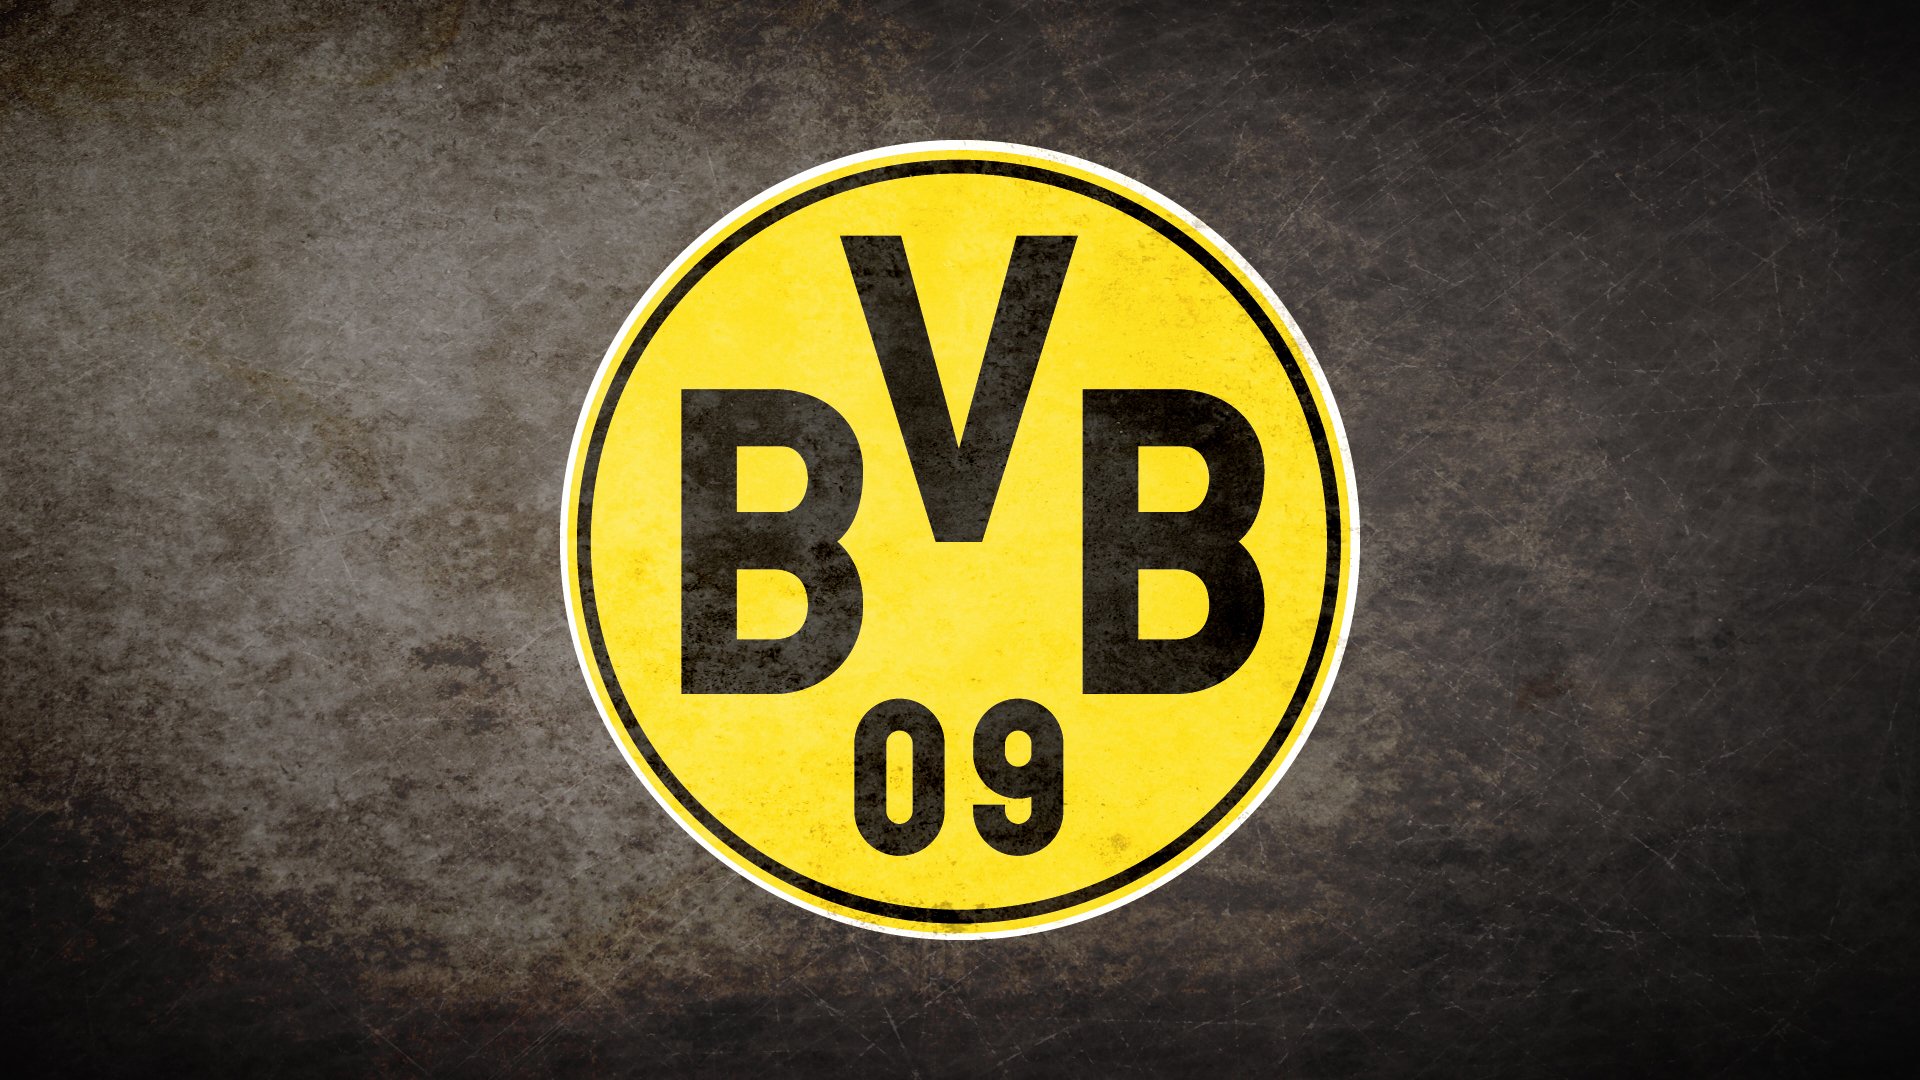 Le Borussia Dortmund tient un joli transfert à 0€, Liverpool fait la gueule !